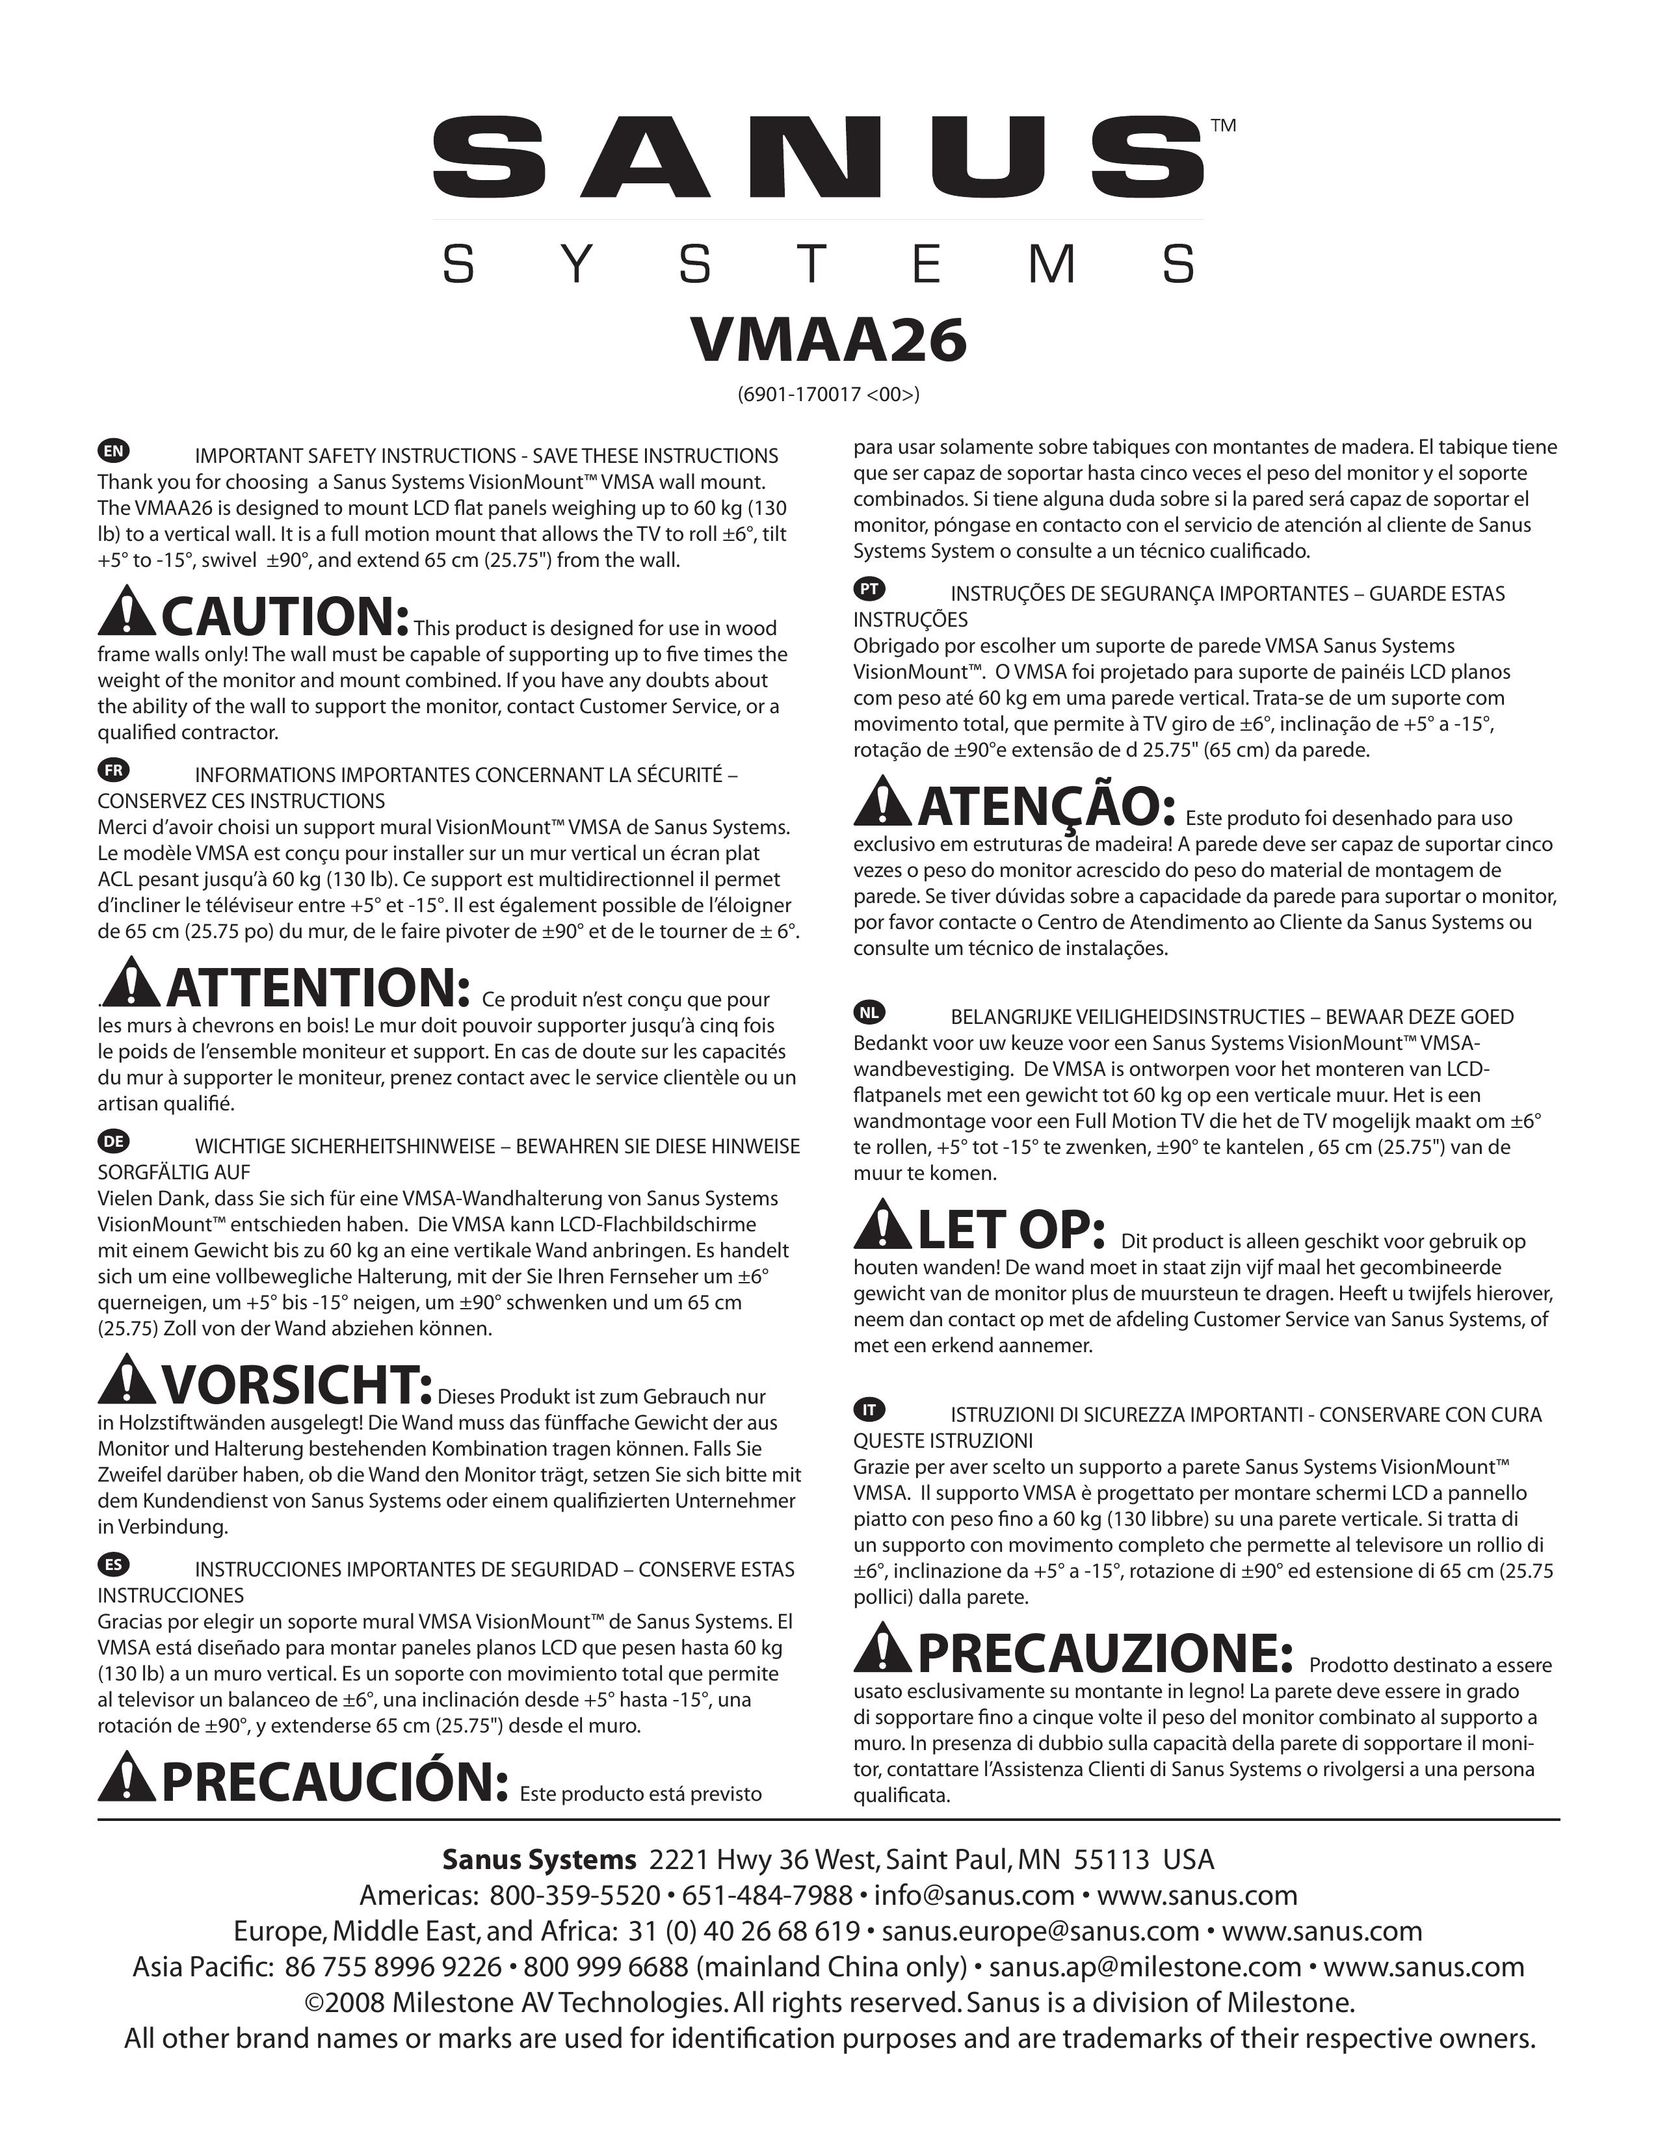 Sanus Systems VMAA26 TV Mount User Manual